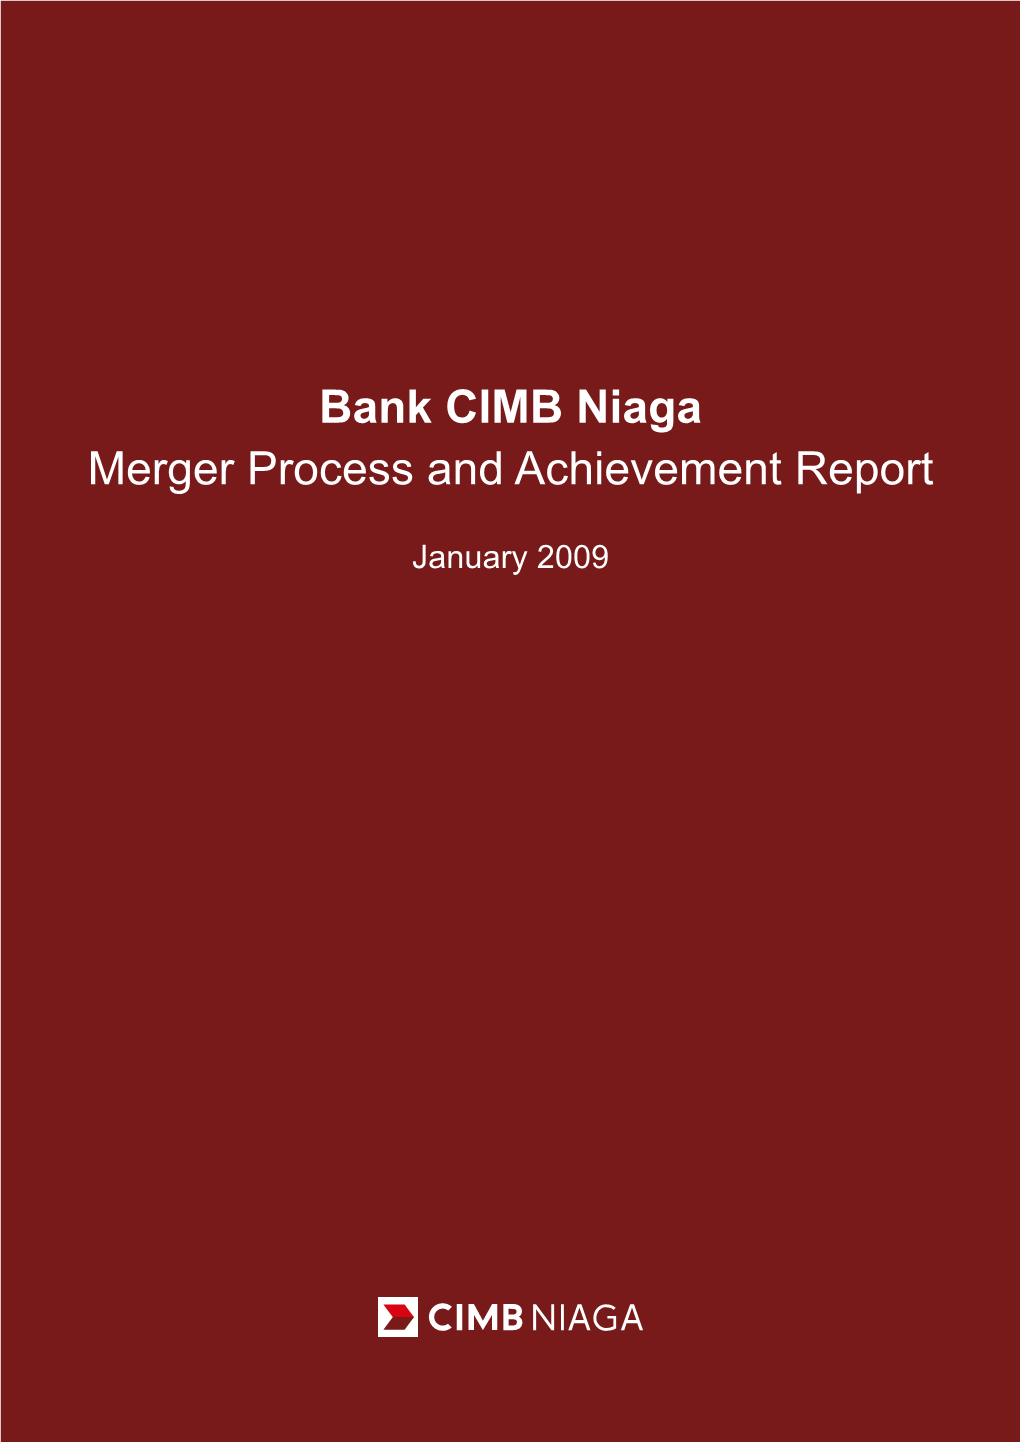 Bank CIMB Niaga Merger Process and Achievement Report